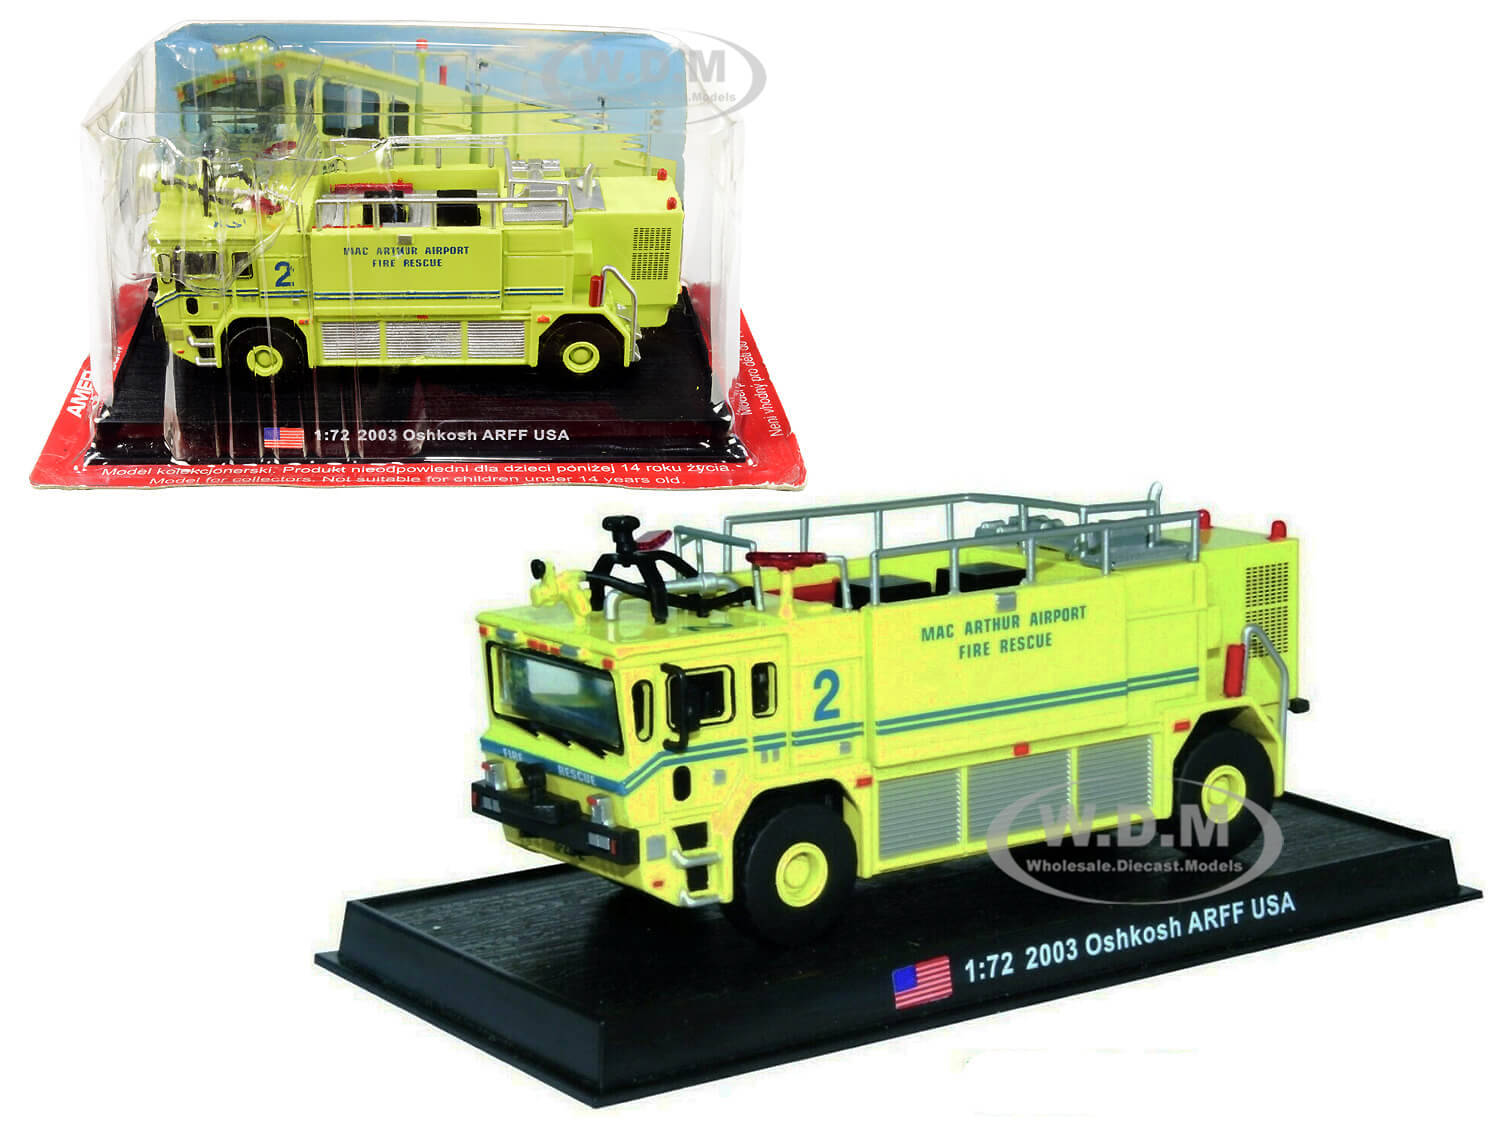 2003 Oshkosh ARFF Fire Rescue Engine "Long Island Mac Arthur Airport" (Ronkonkoma New York) 1/72 Diecast Model by Amercom